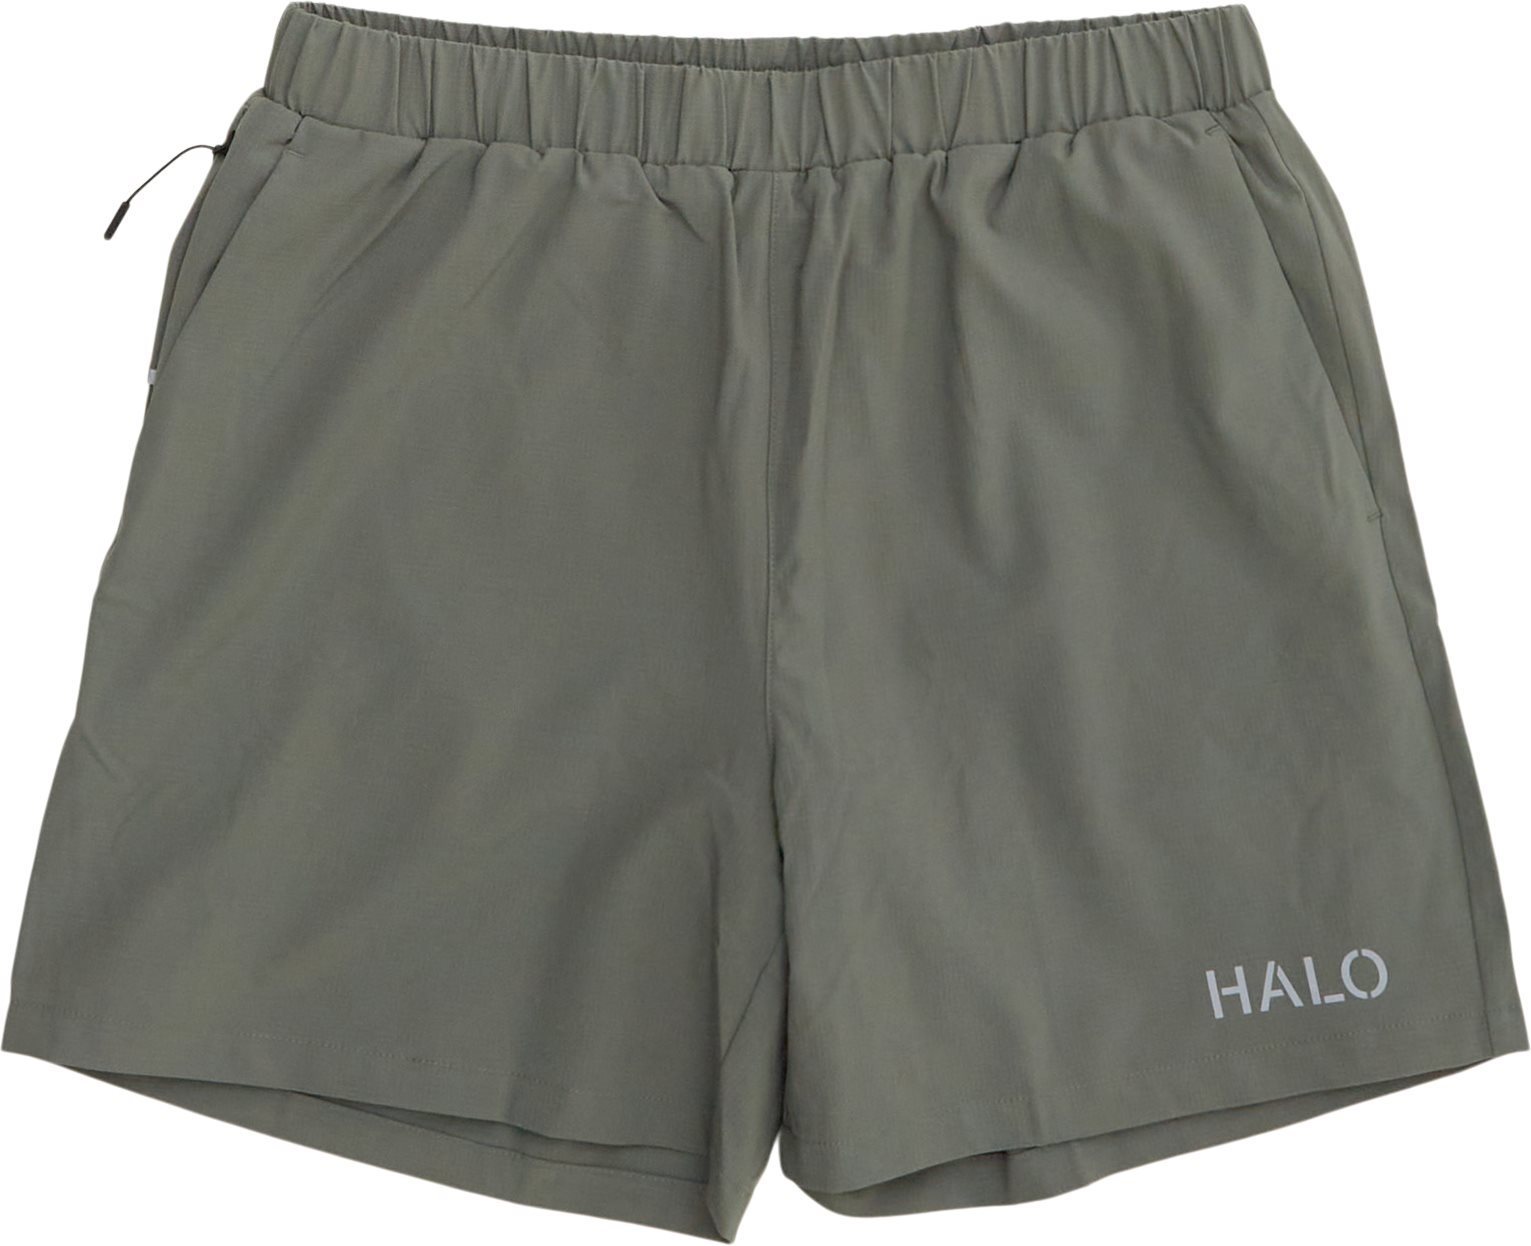 HALO Shorts 2IN1 TECH SHORTS 610503 Army